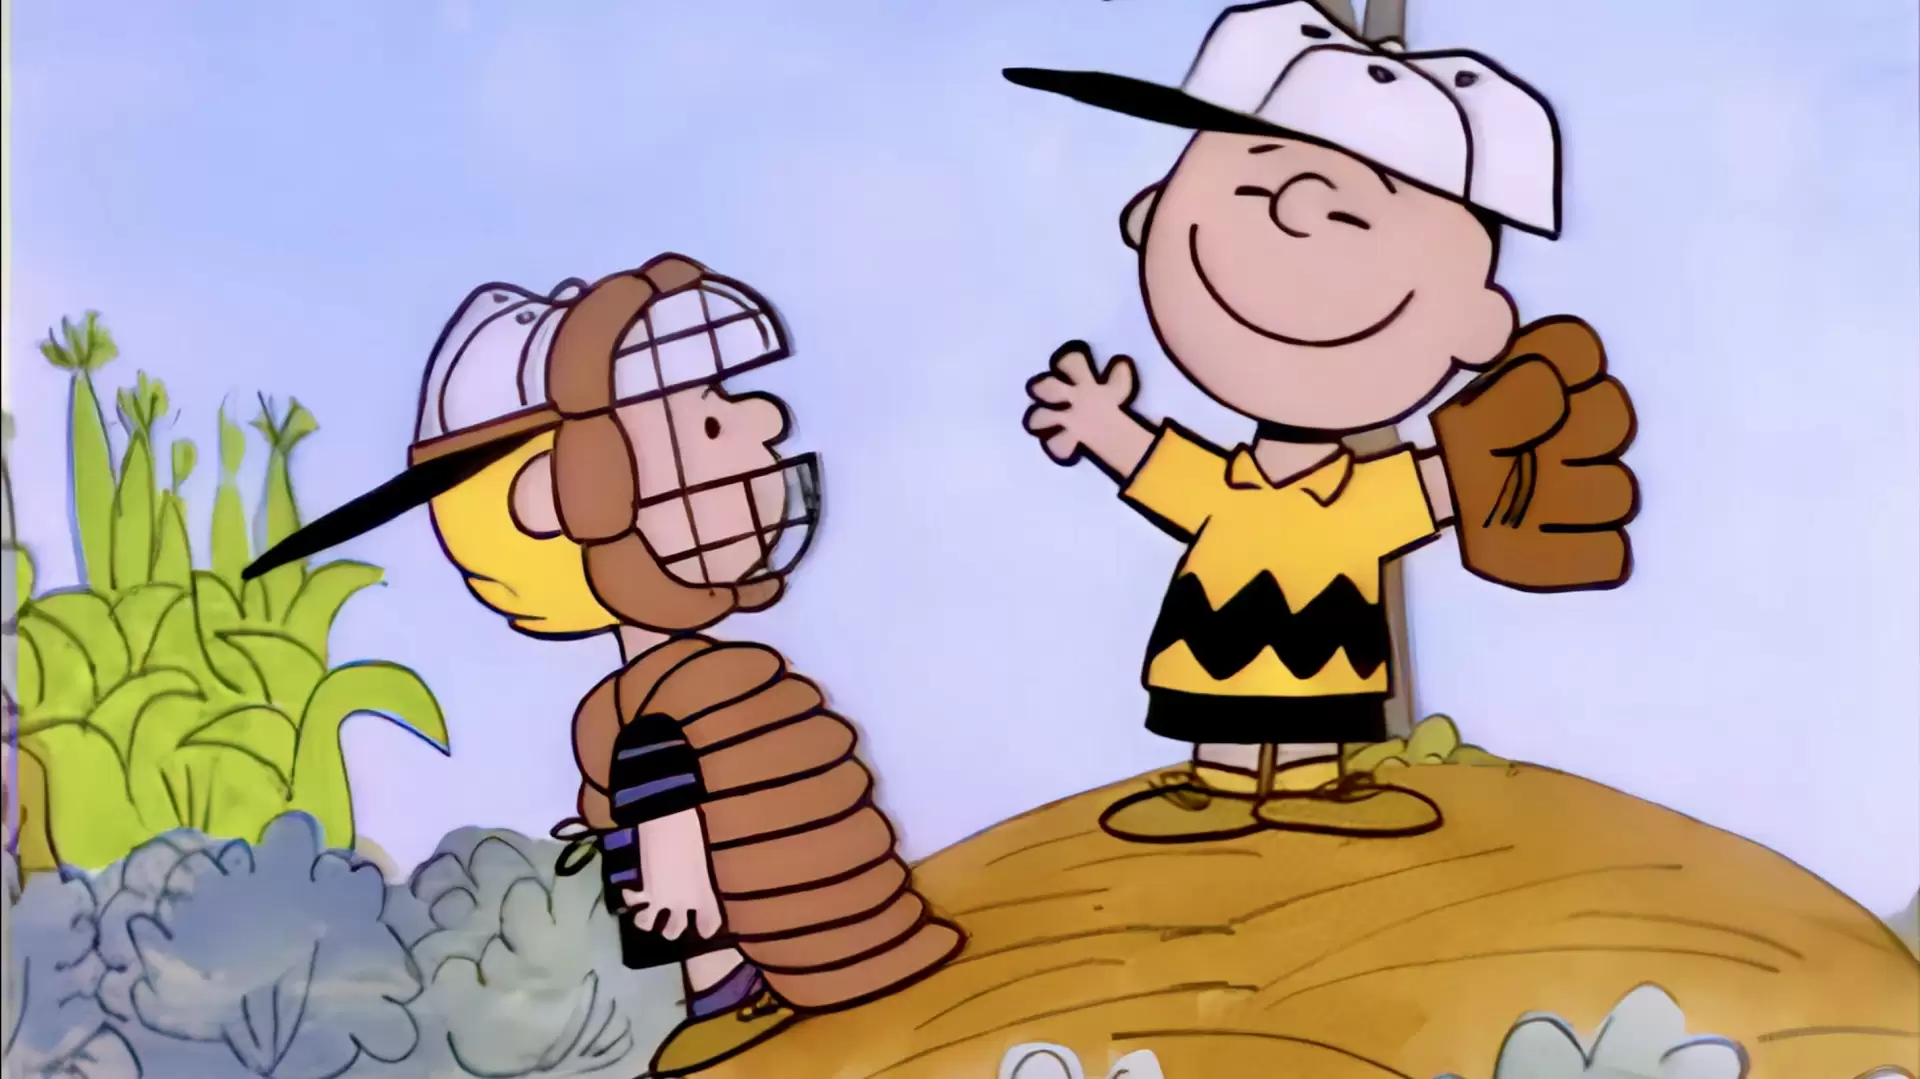 دانلود انیمیشن It’s Arbor Day, Charlie Brown 1976